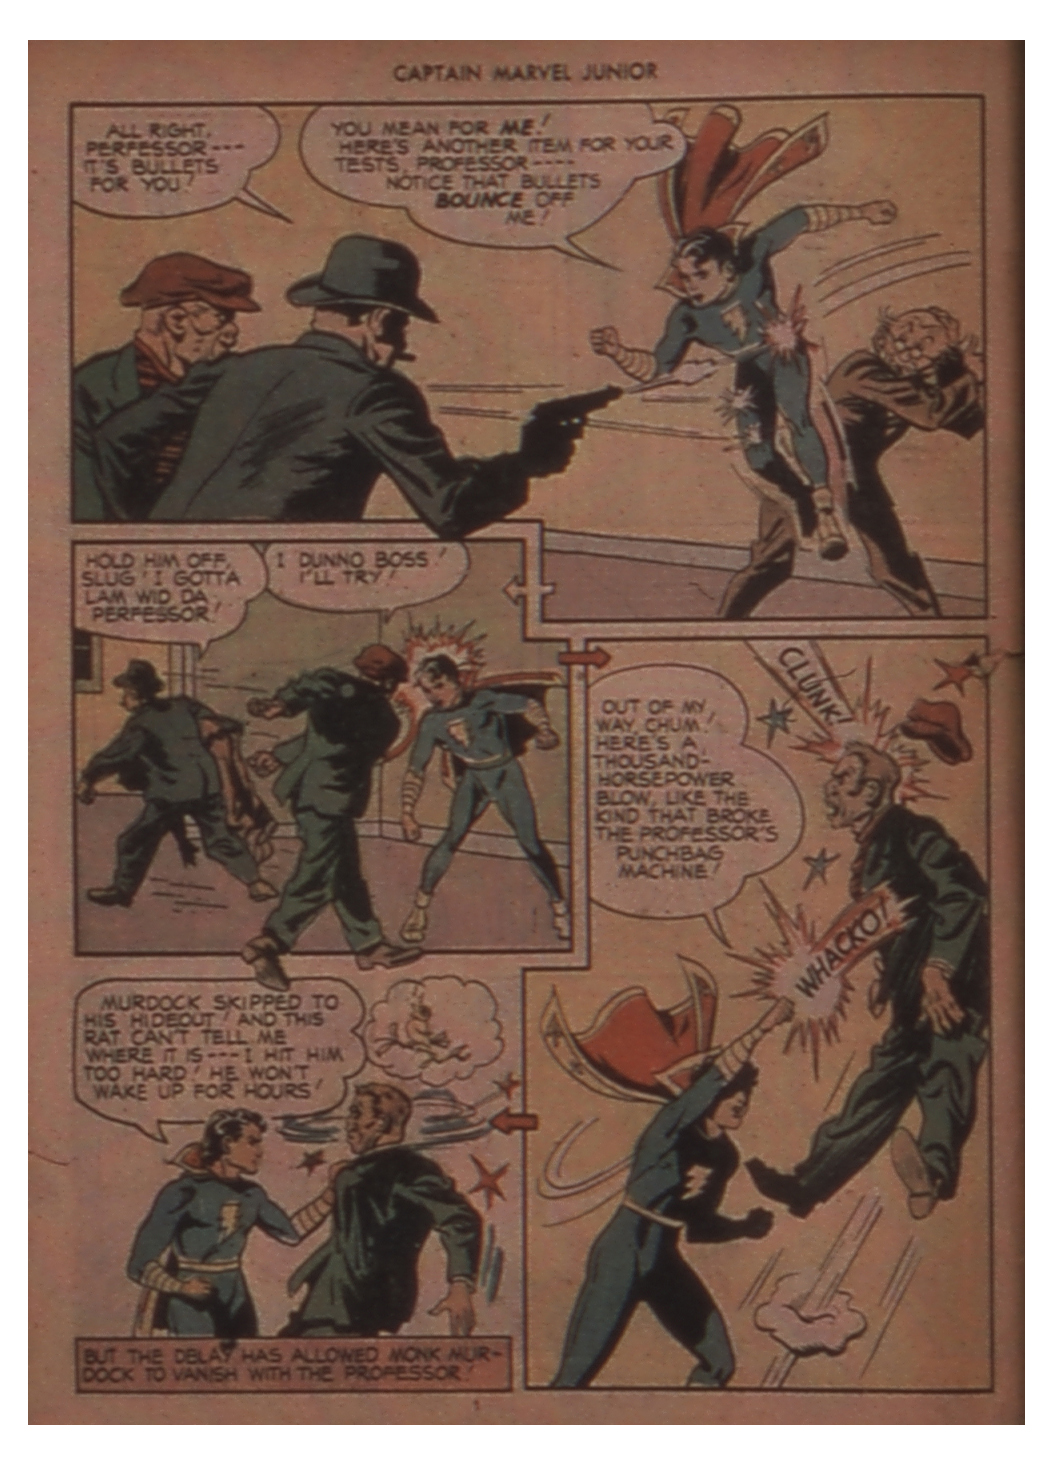 Read online Captain Marvel, Jr. comic -  Issue #18 - 48